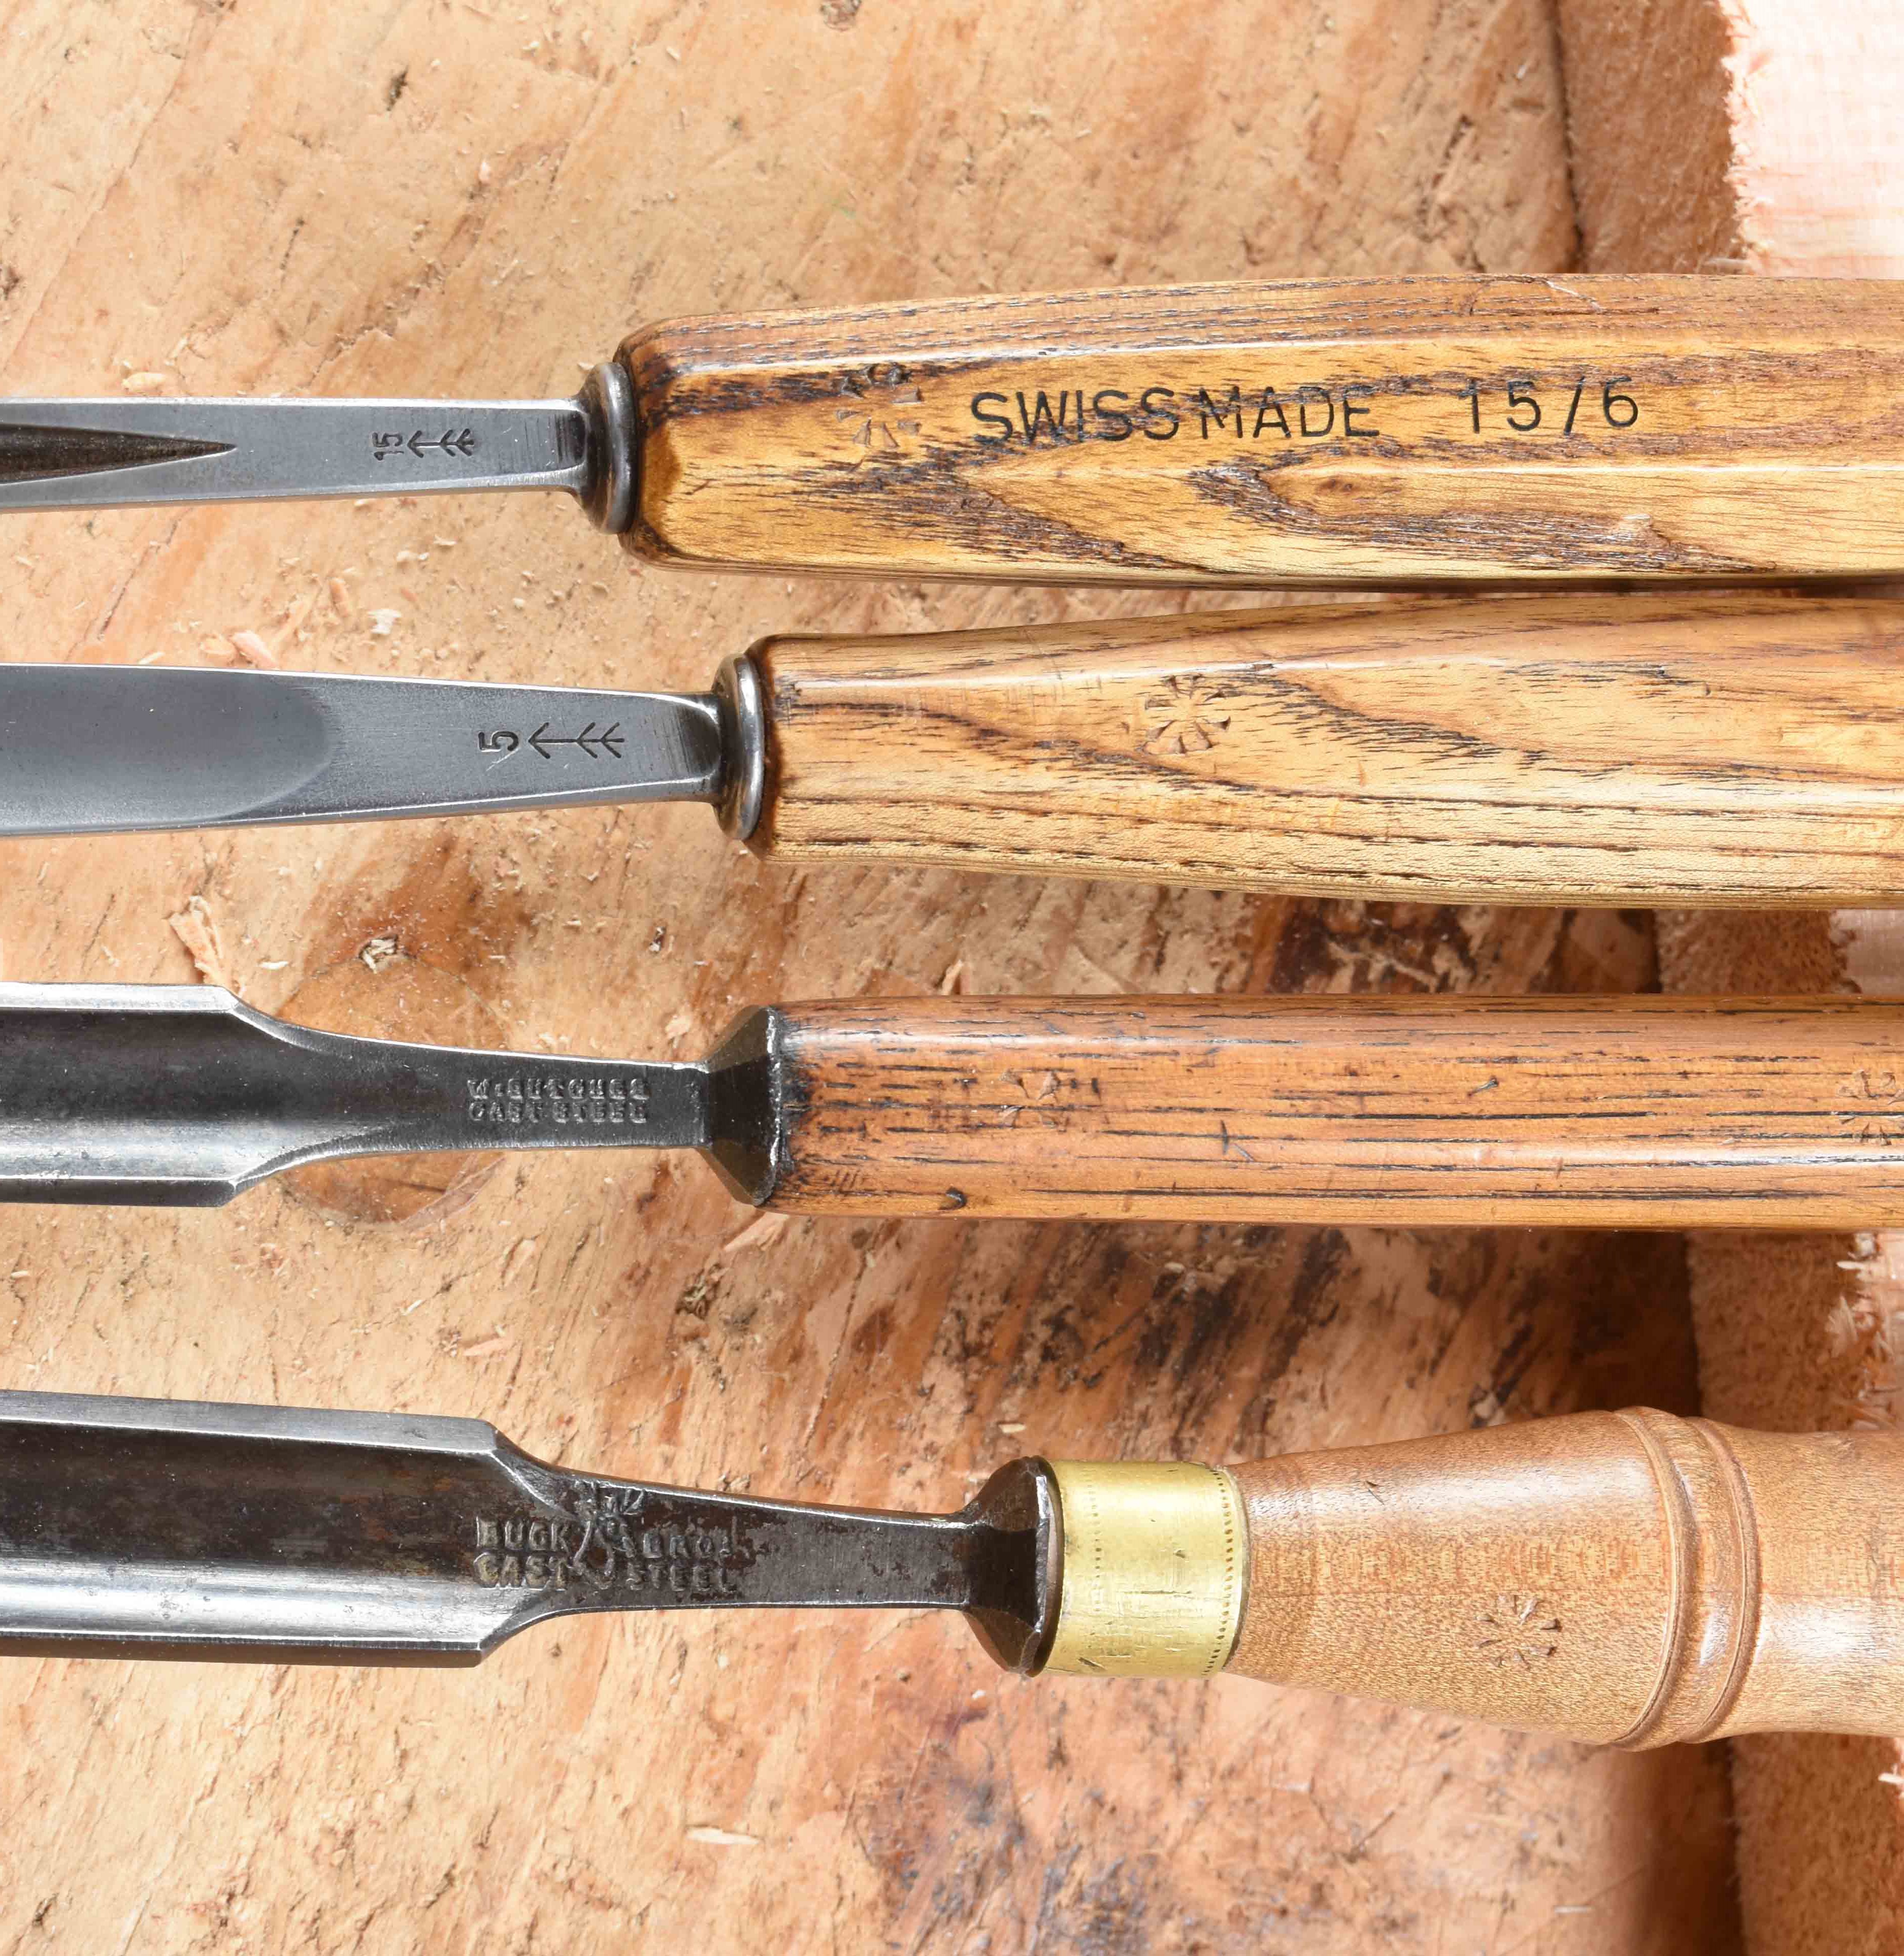 Pfeil - Gouges n.14 U Parting tools, straight shank - carving tools